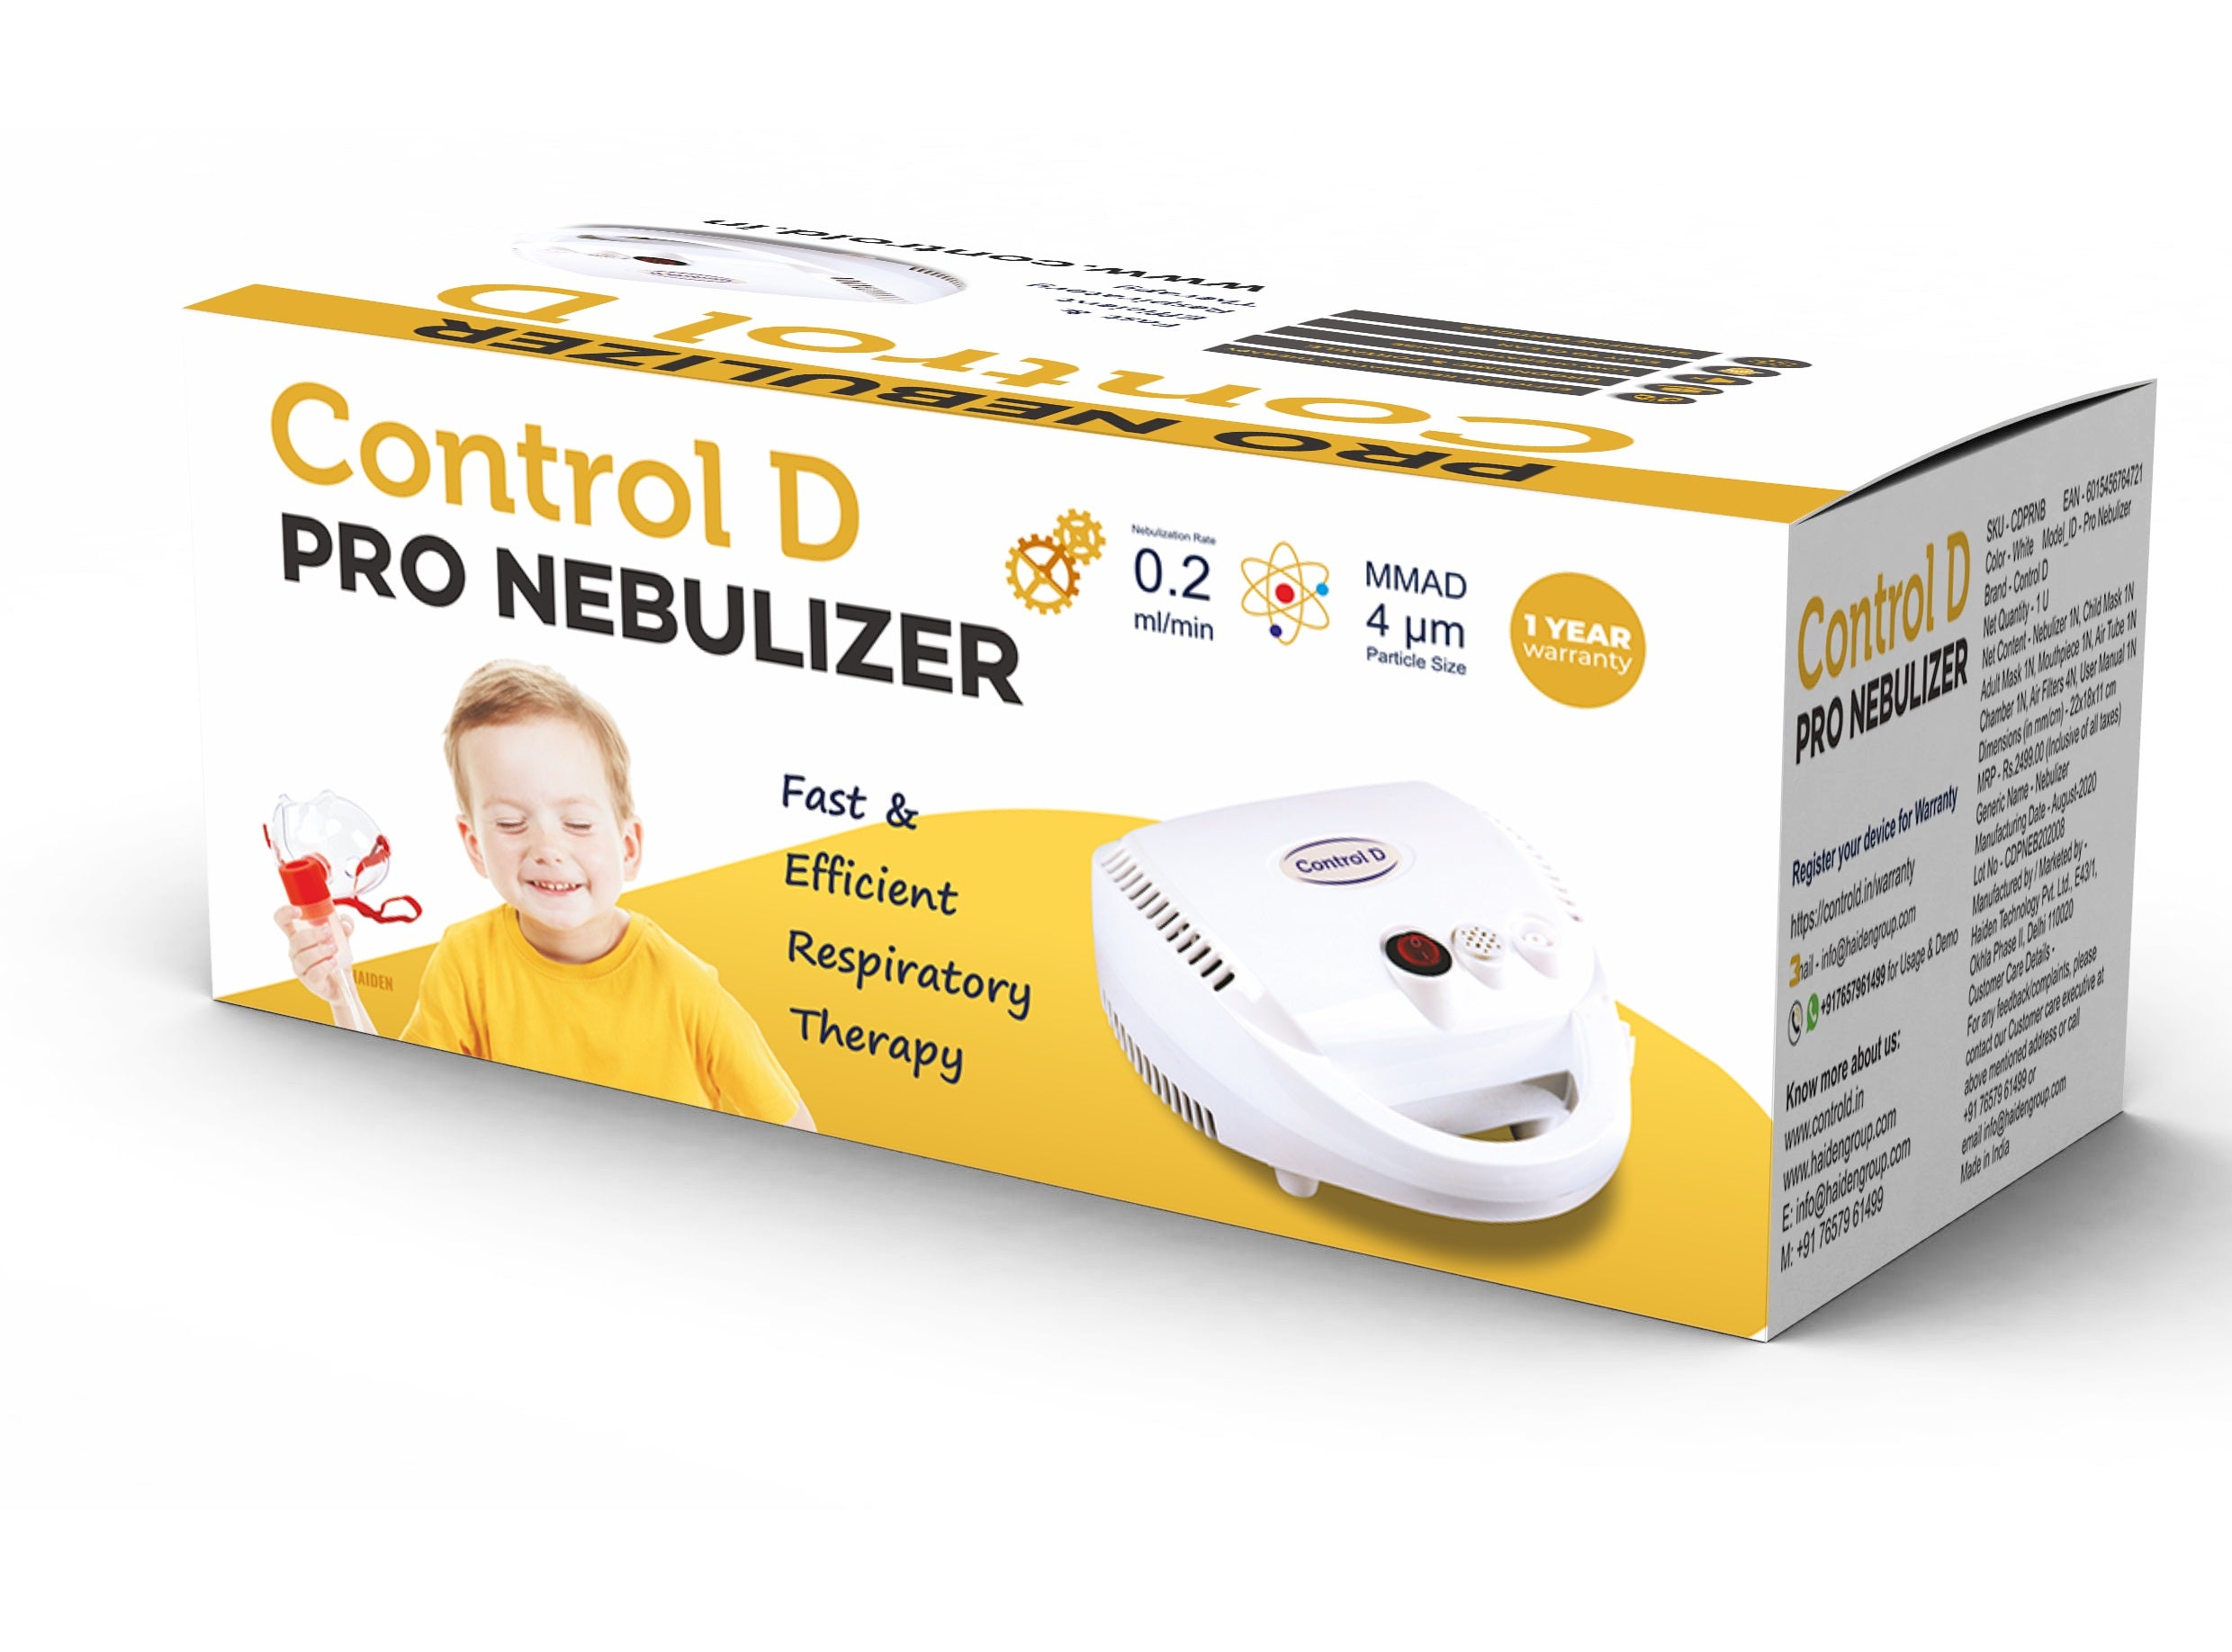 Control D Pro Nebulizer